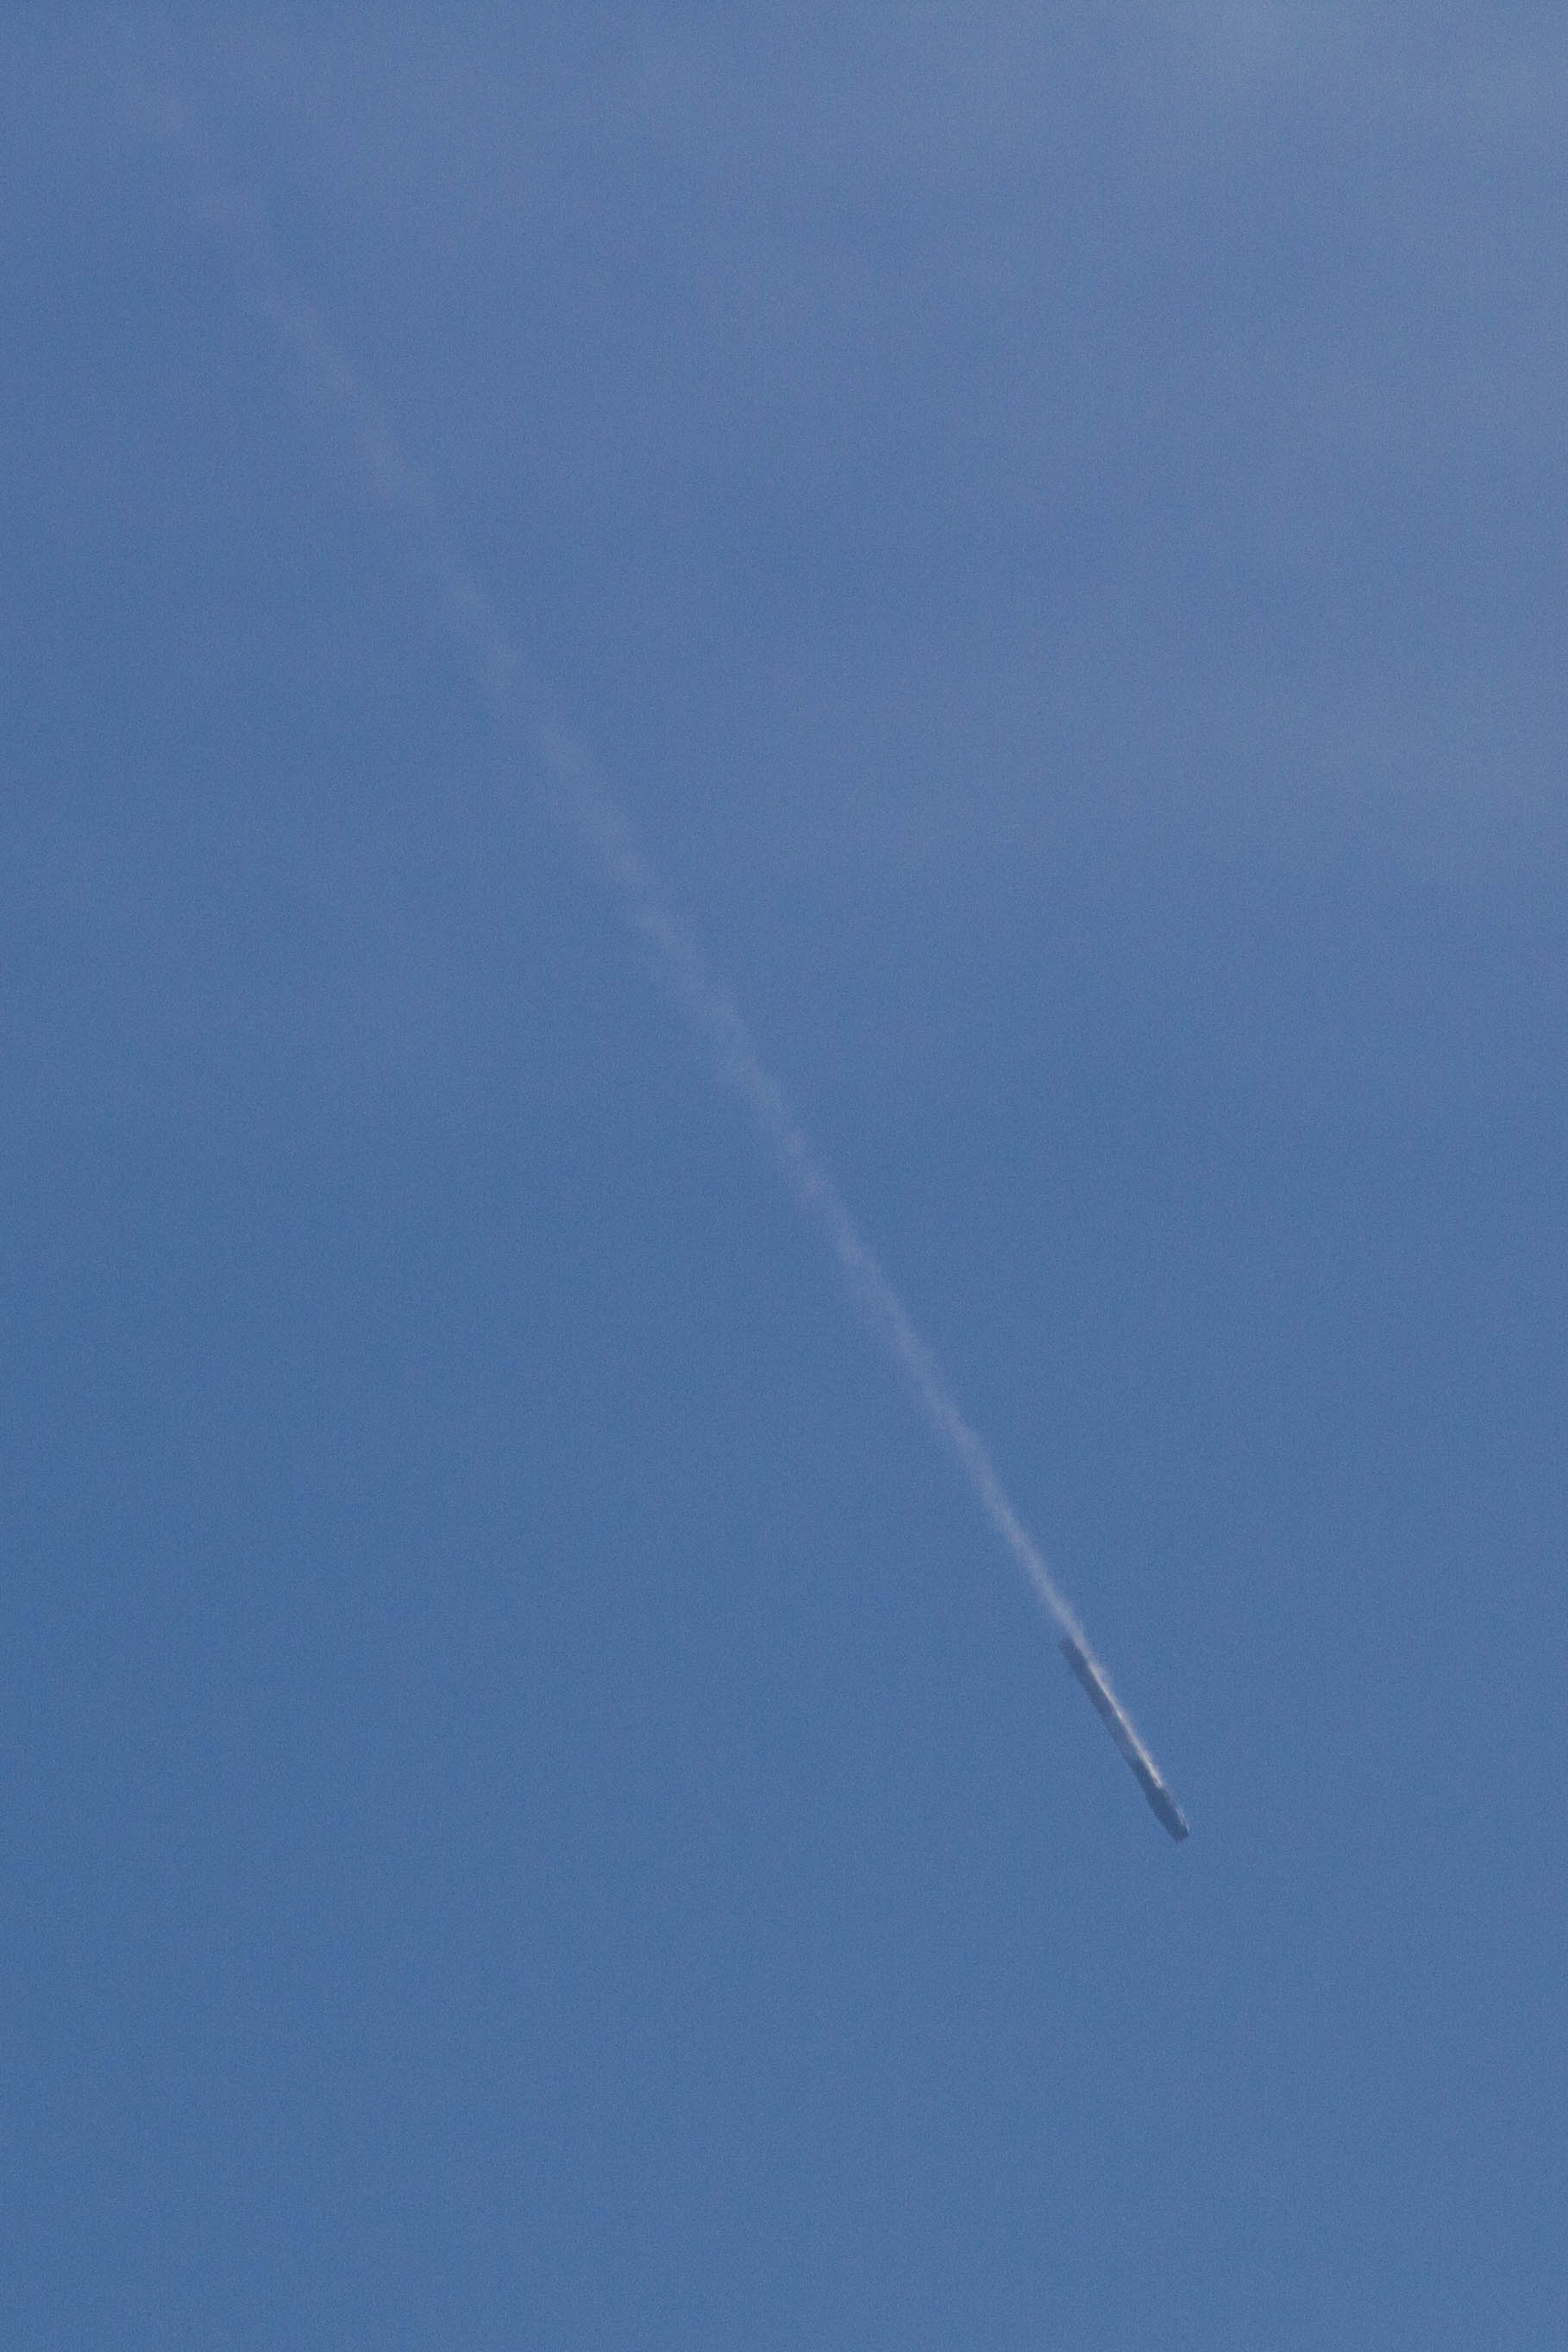 CRS13 landing (SpaceX) (4)